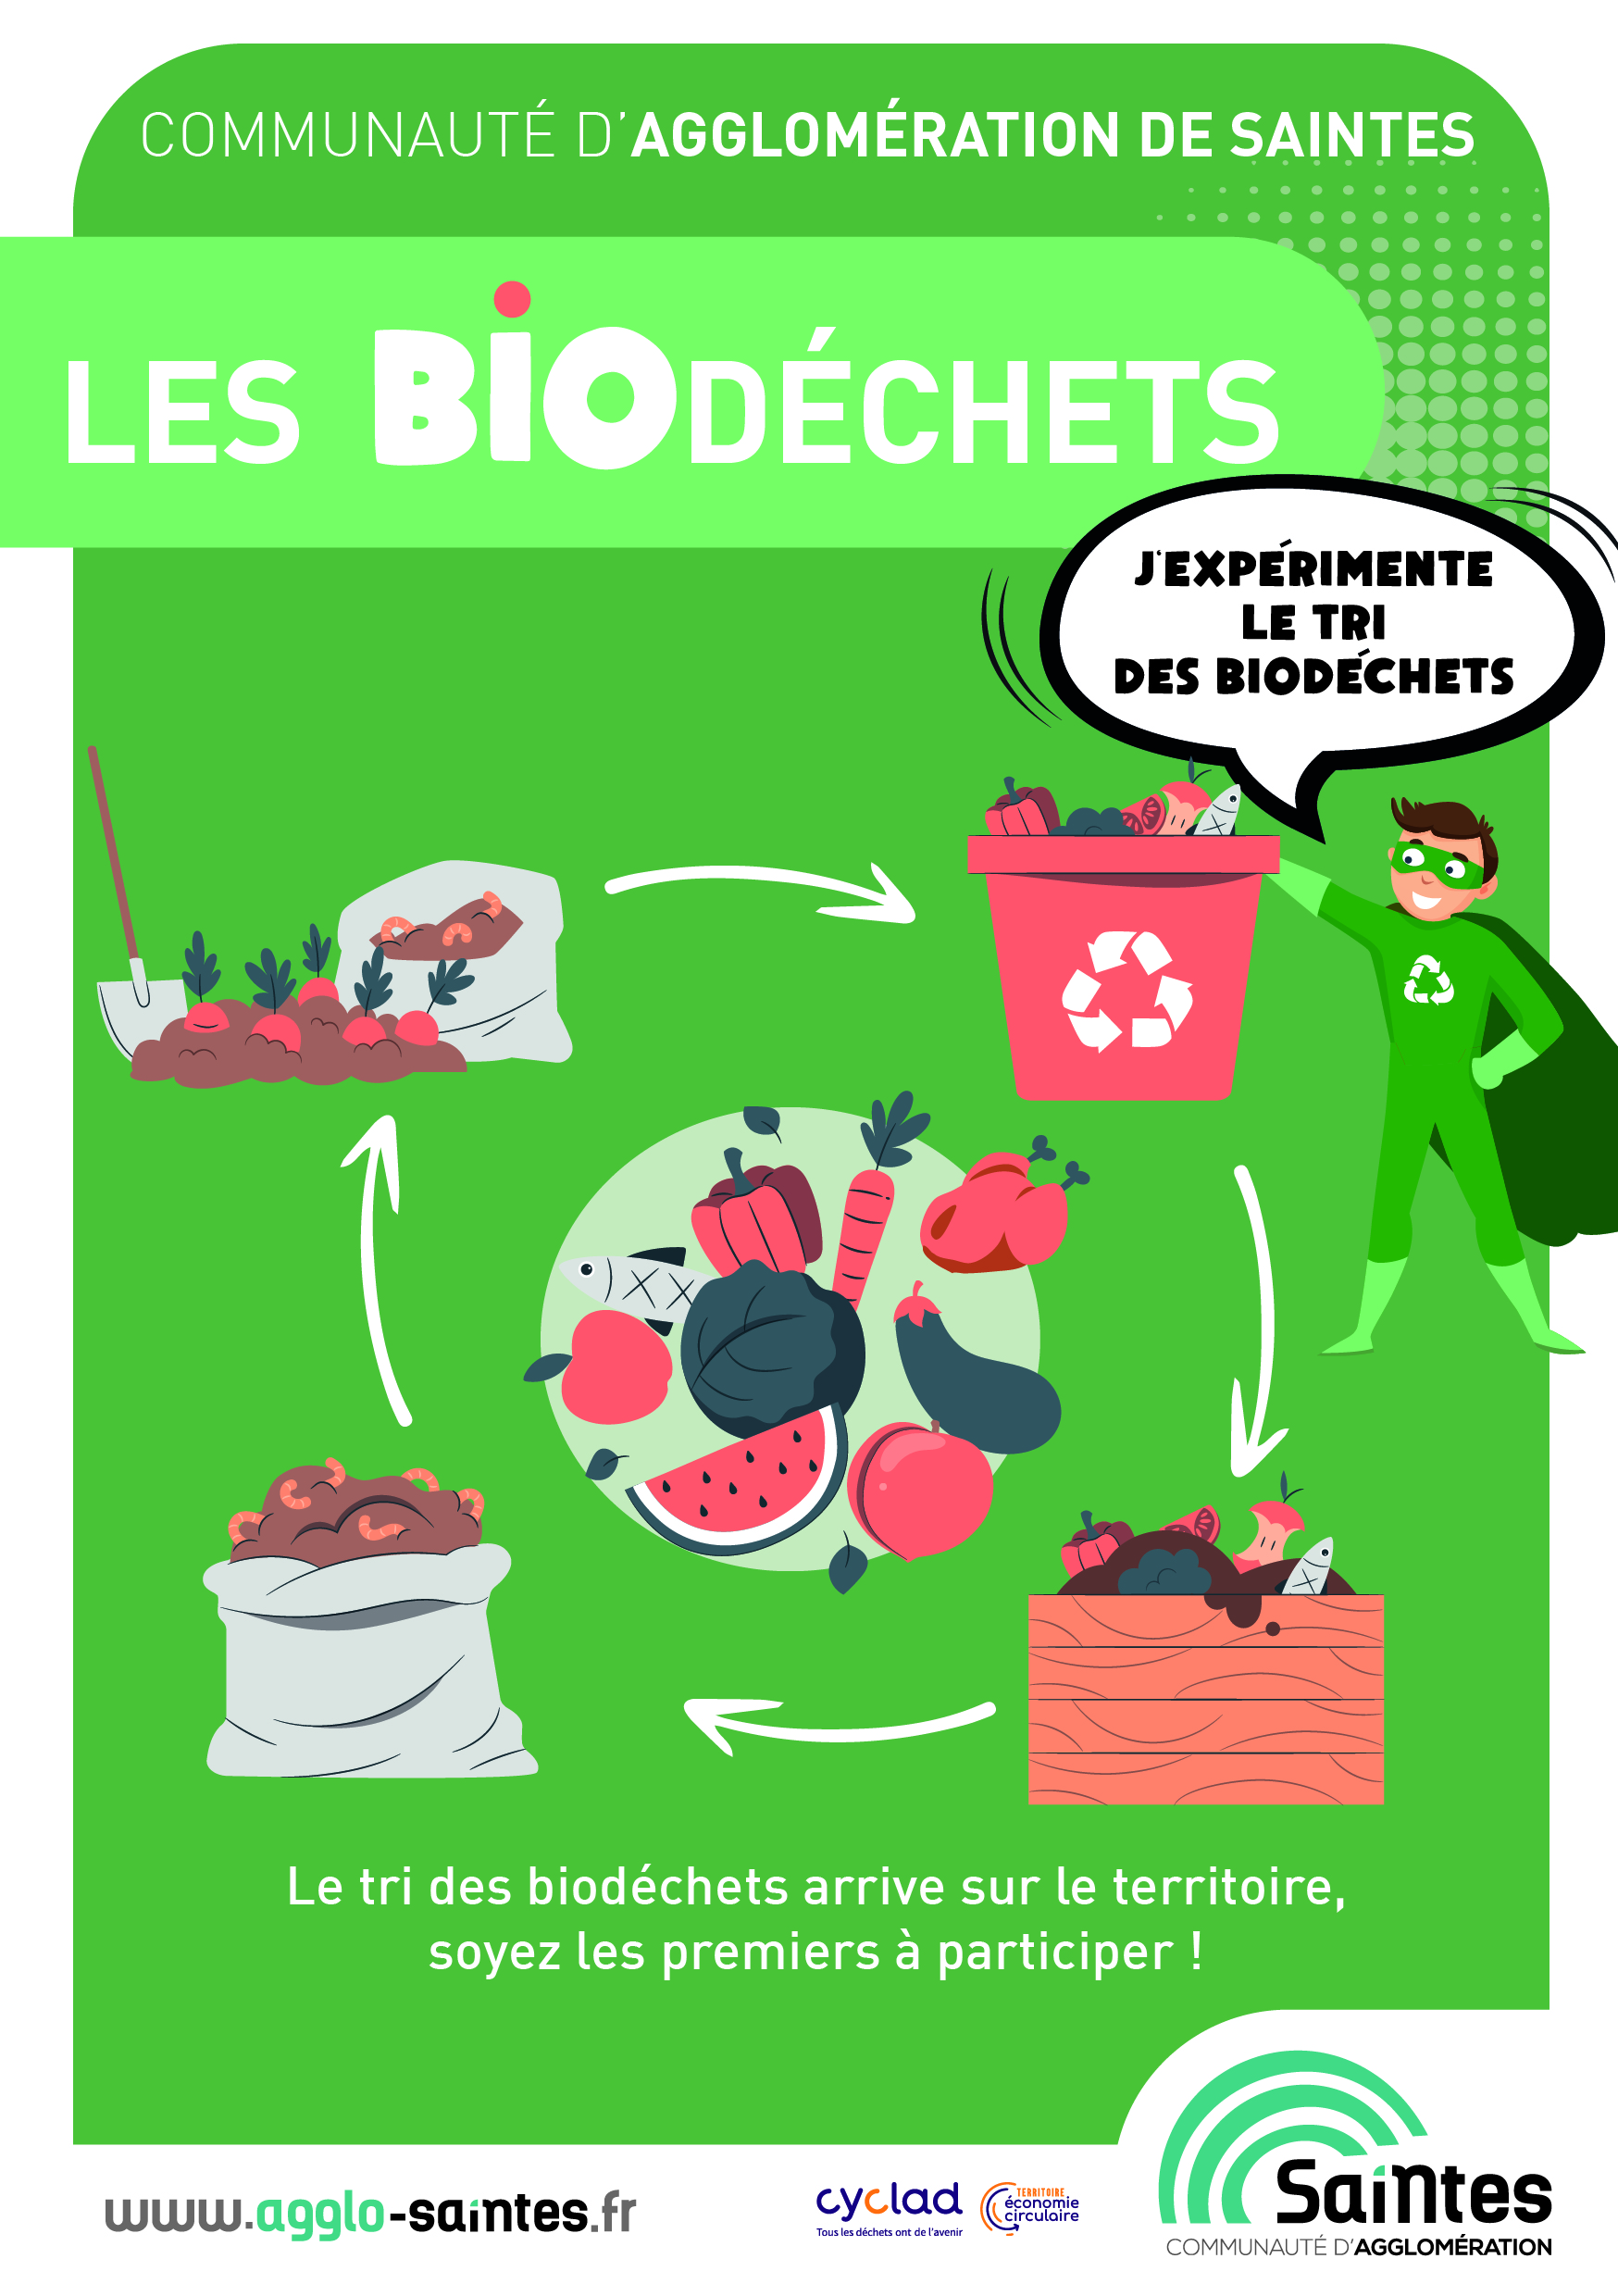 Biodéchets